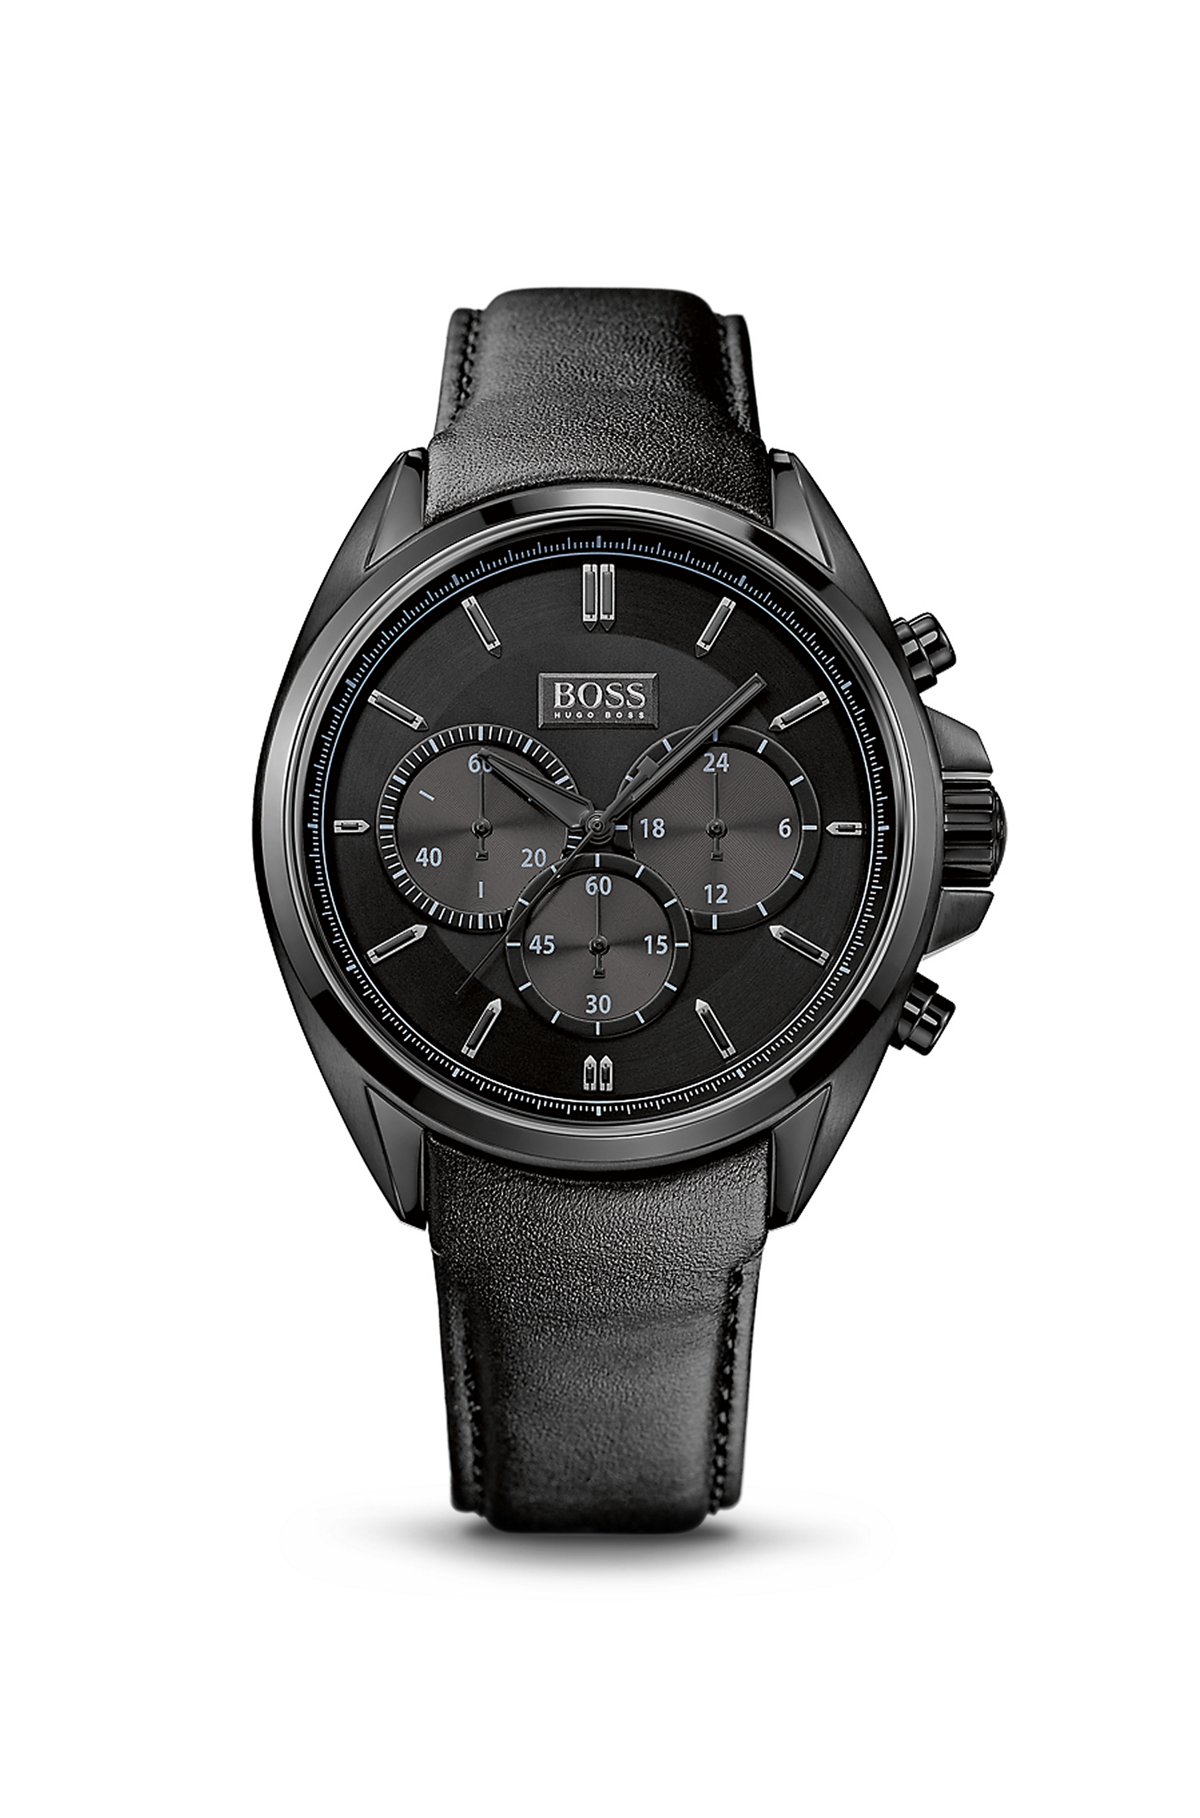 Часы Boss Hugo Boss. Часы Хуго босс мужские. Часы Boss Hugo Boss мужские. Hugo Boss часы 508106. Часы хуго босс